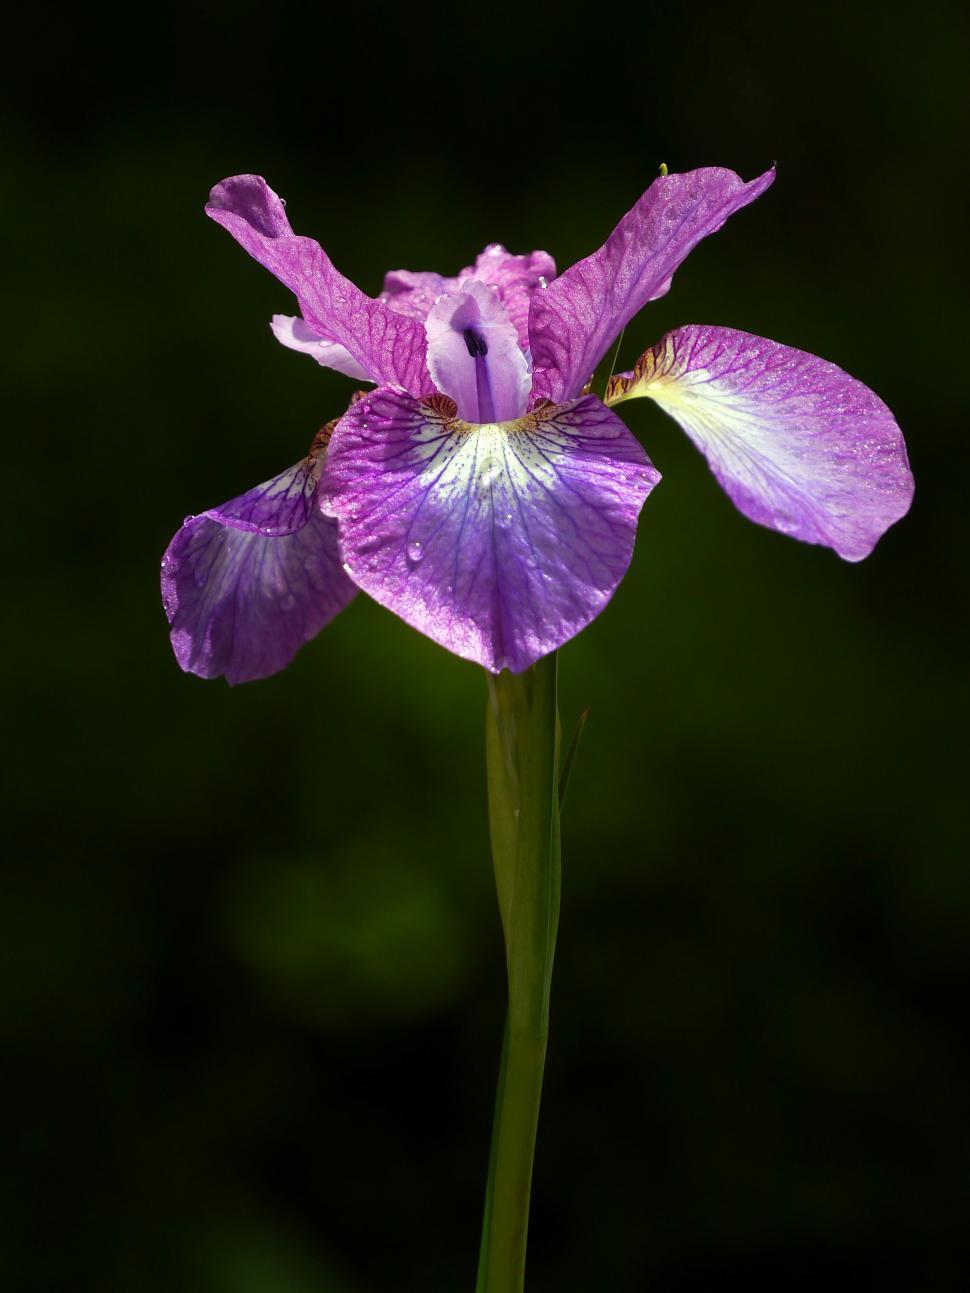 Free Image of Purple Iris Flower with Water Drop 